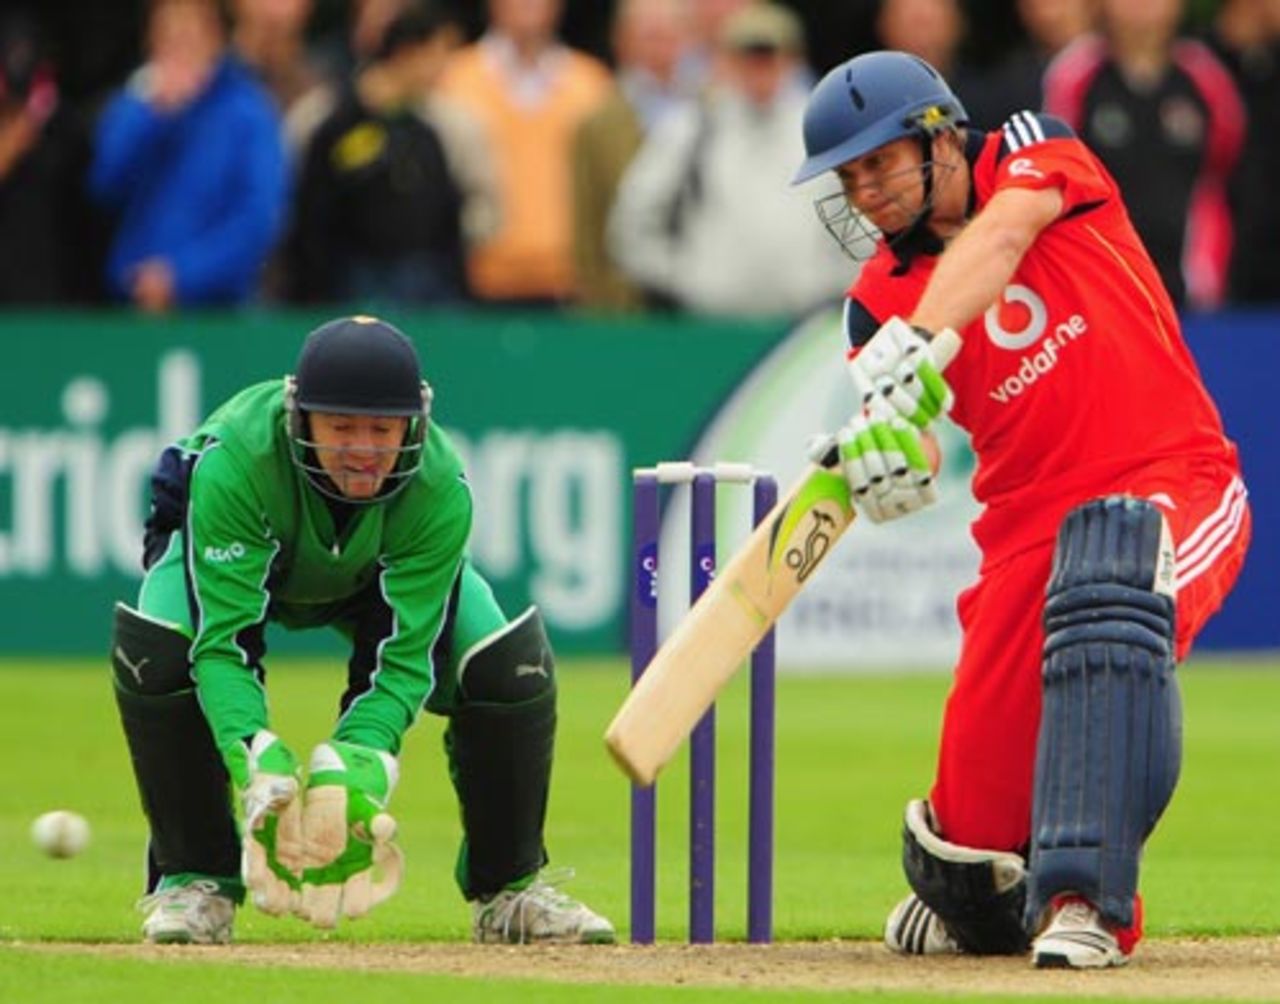 Luke Wright struck 36 off 26 balls, Ireland v England, only ODI, Stormont, August 27, 2009